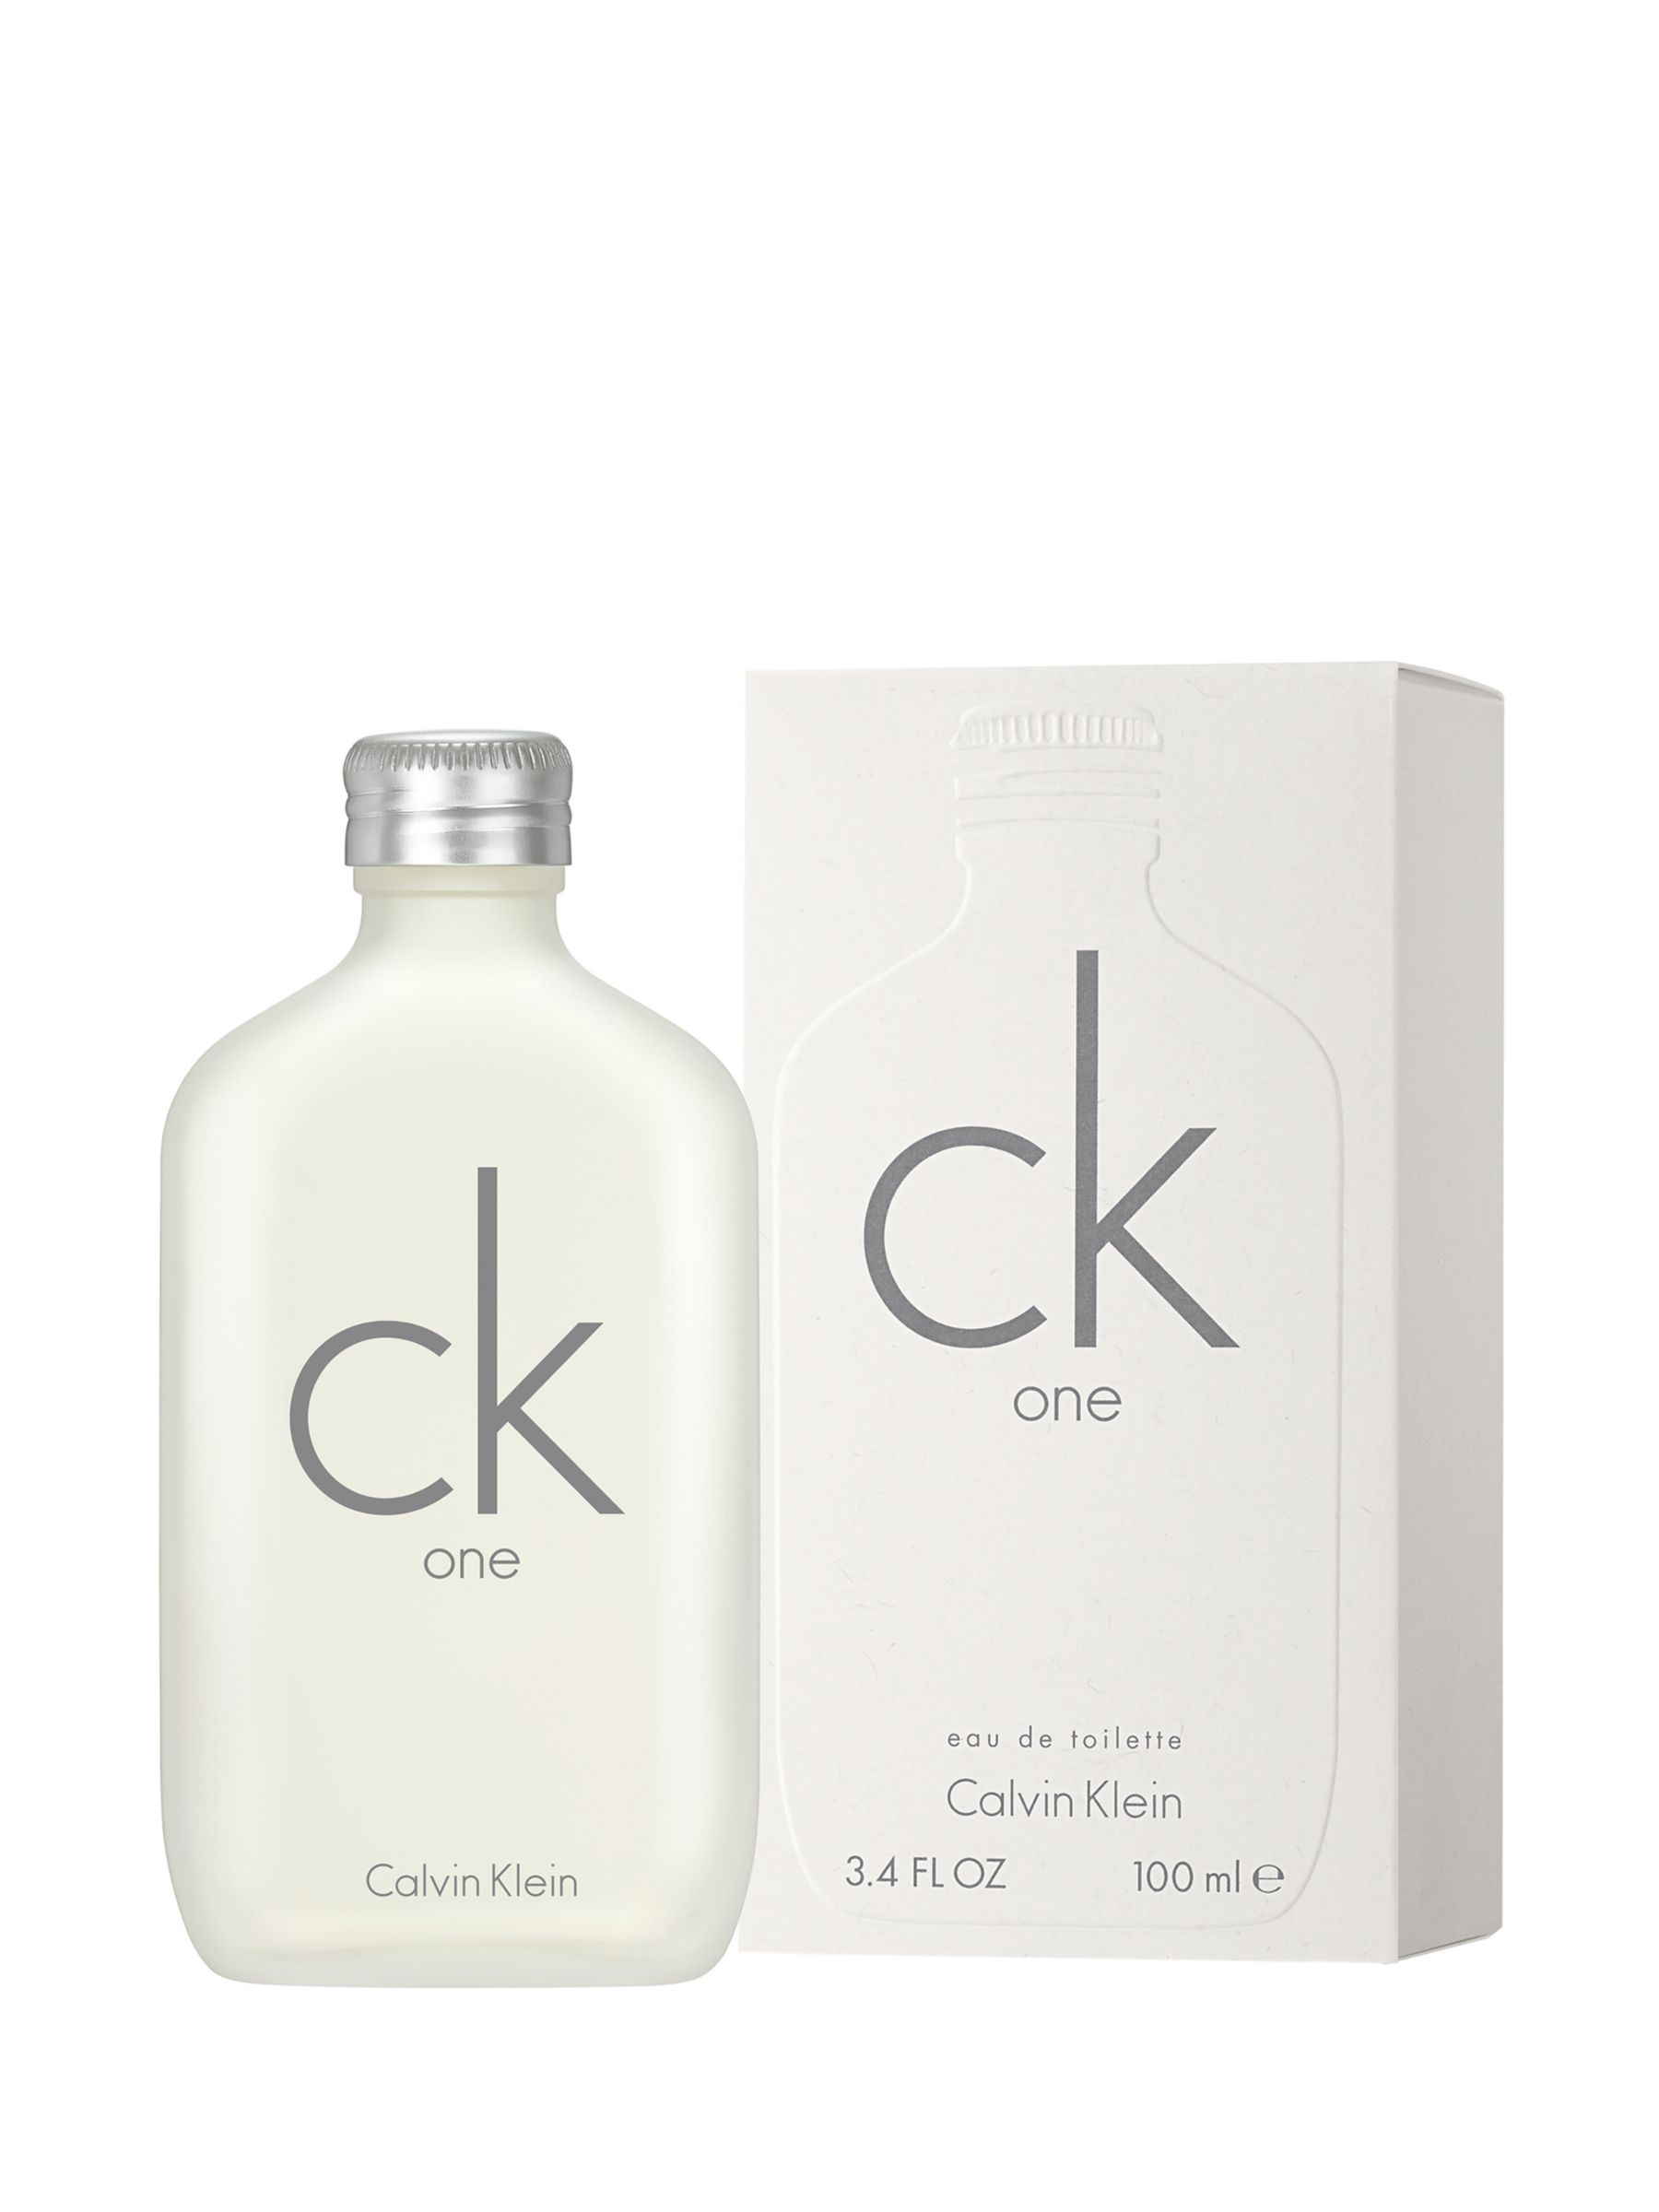 Calvin Klein CK ONE Eau de Toilette, 100ml 2